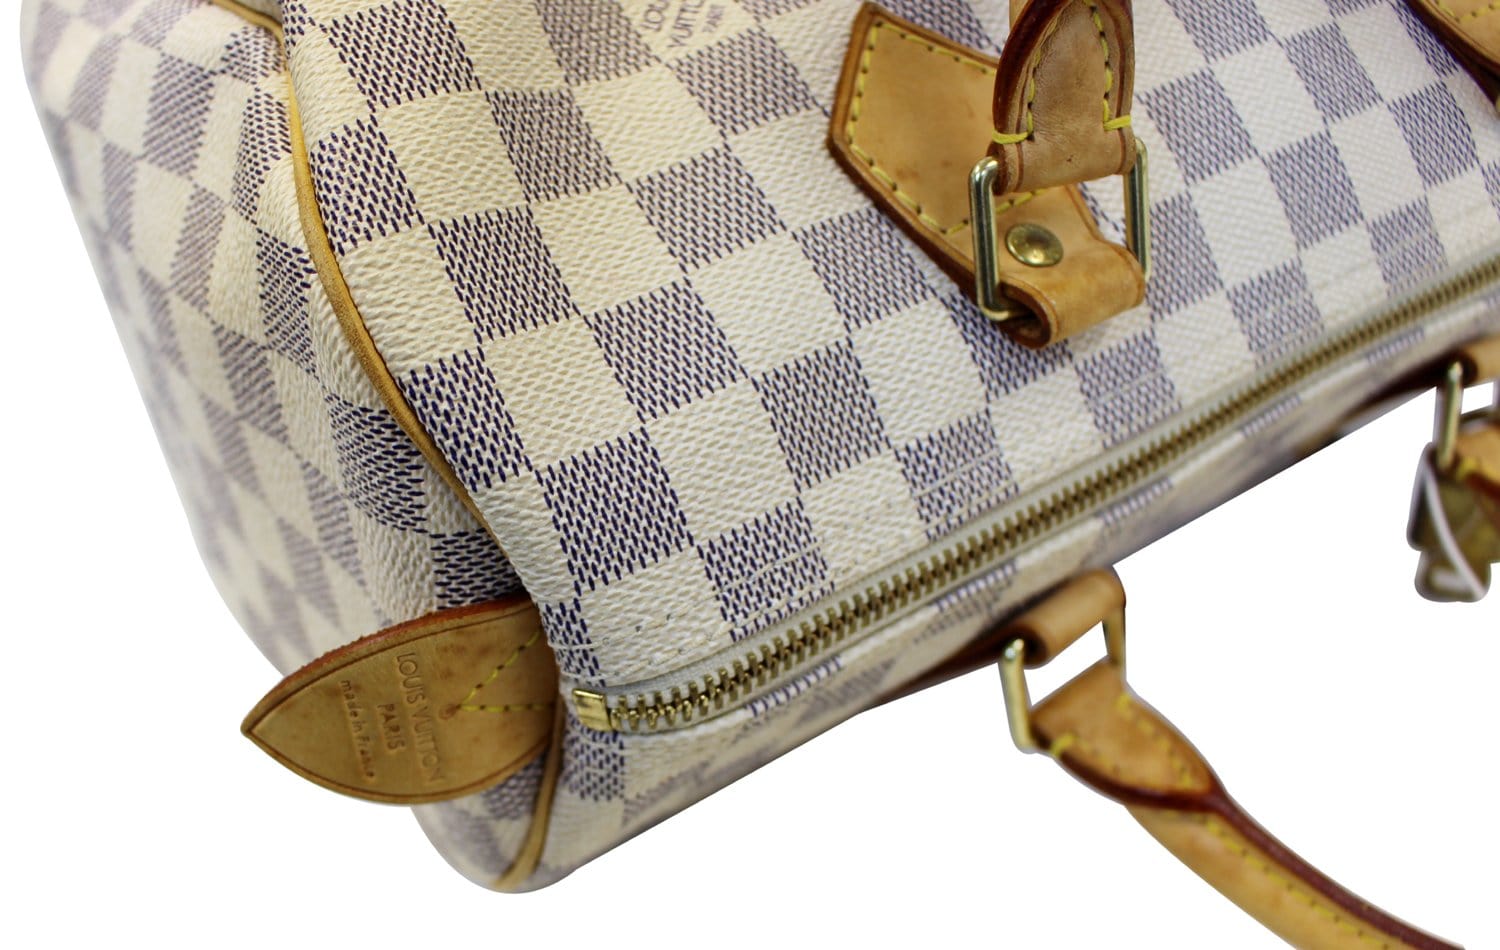 Louis Vuitton Damier Azur Speedy 30 Satchel Handbag - 15% OFF